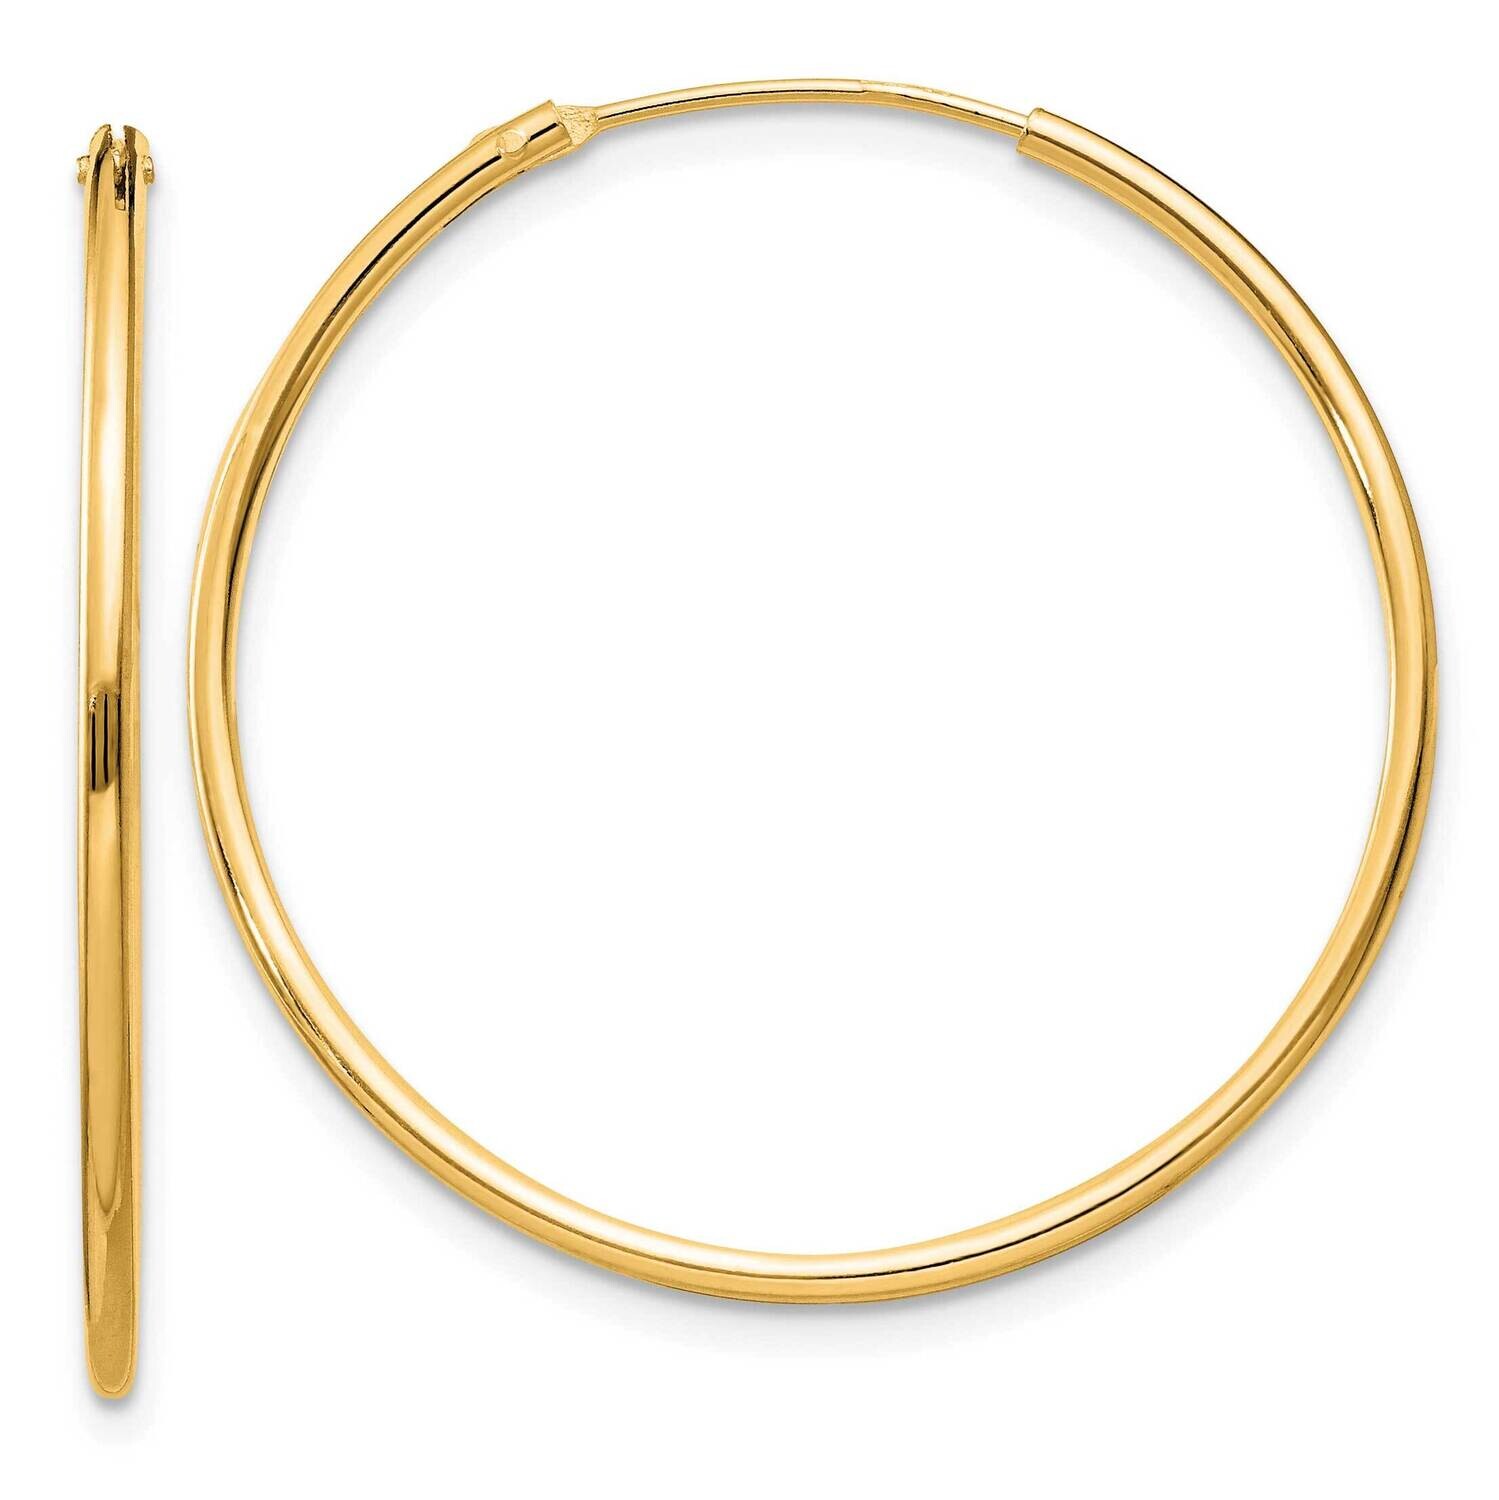 Flash Gold-Plated 1.3mm Endless Hoop Earrings Sterling Silver QE4356GP